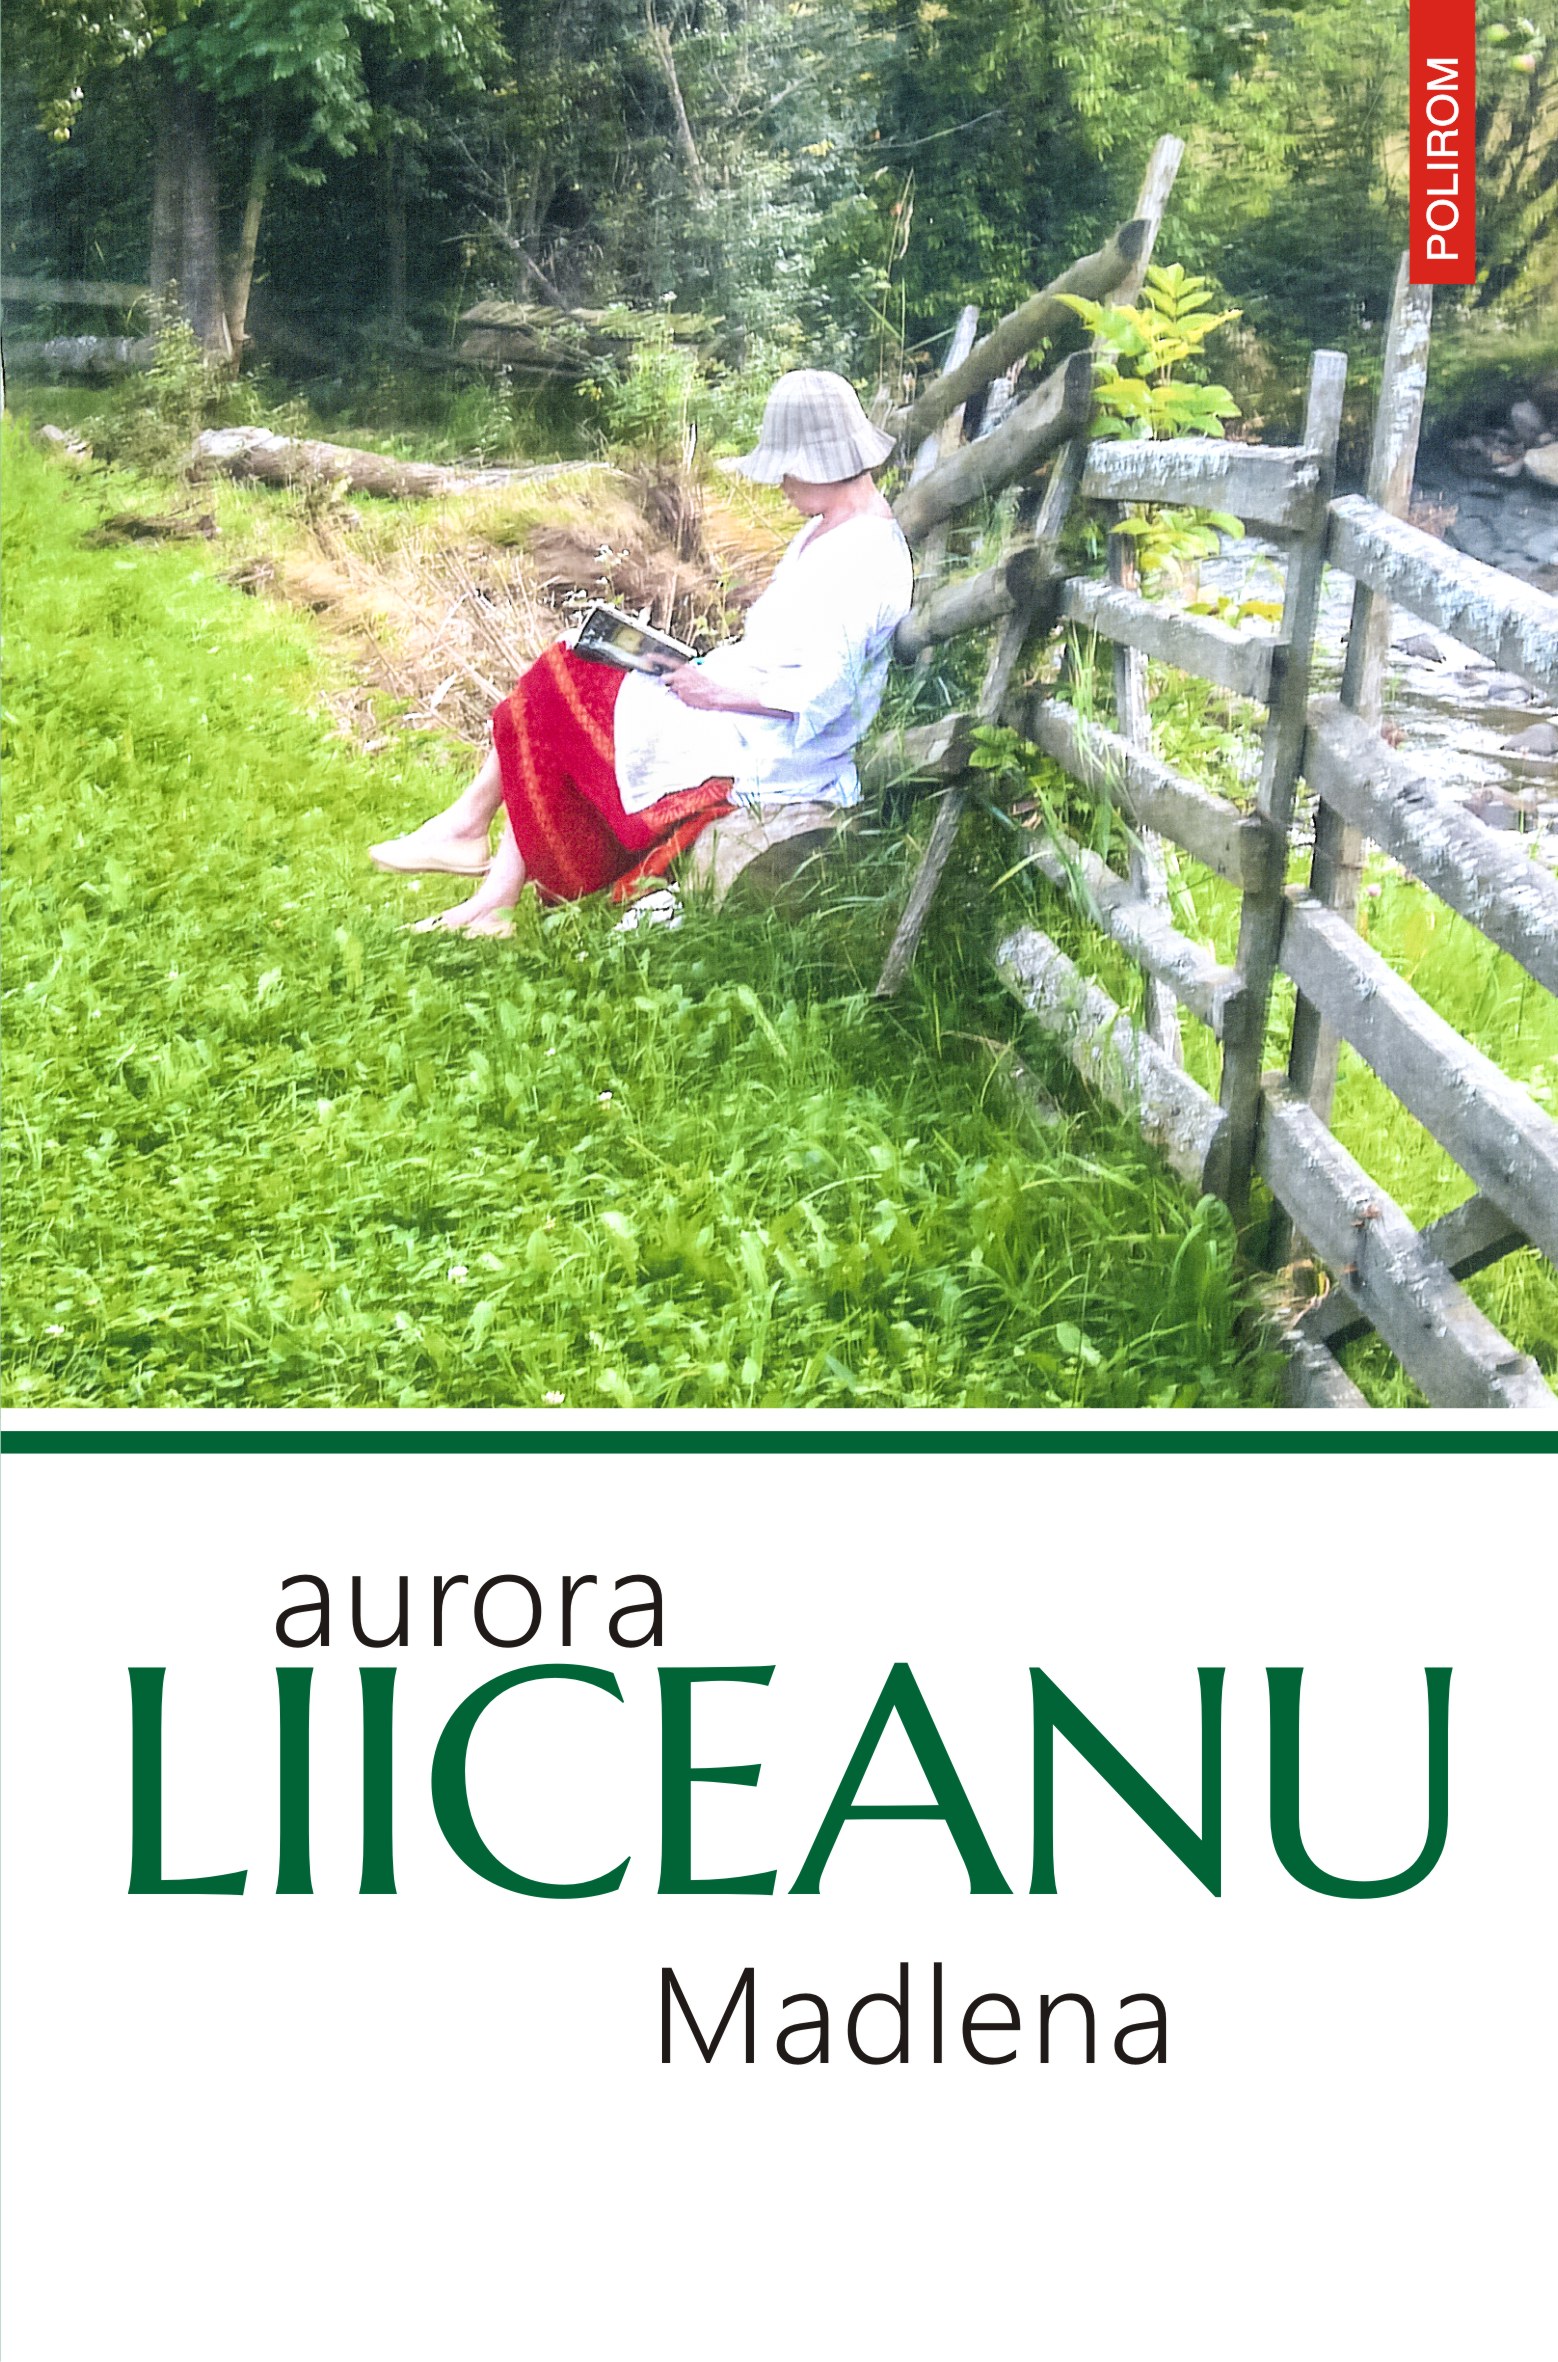 eBook Madlena - Aurora Liiceanu